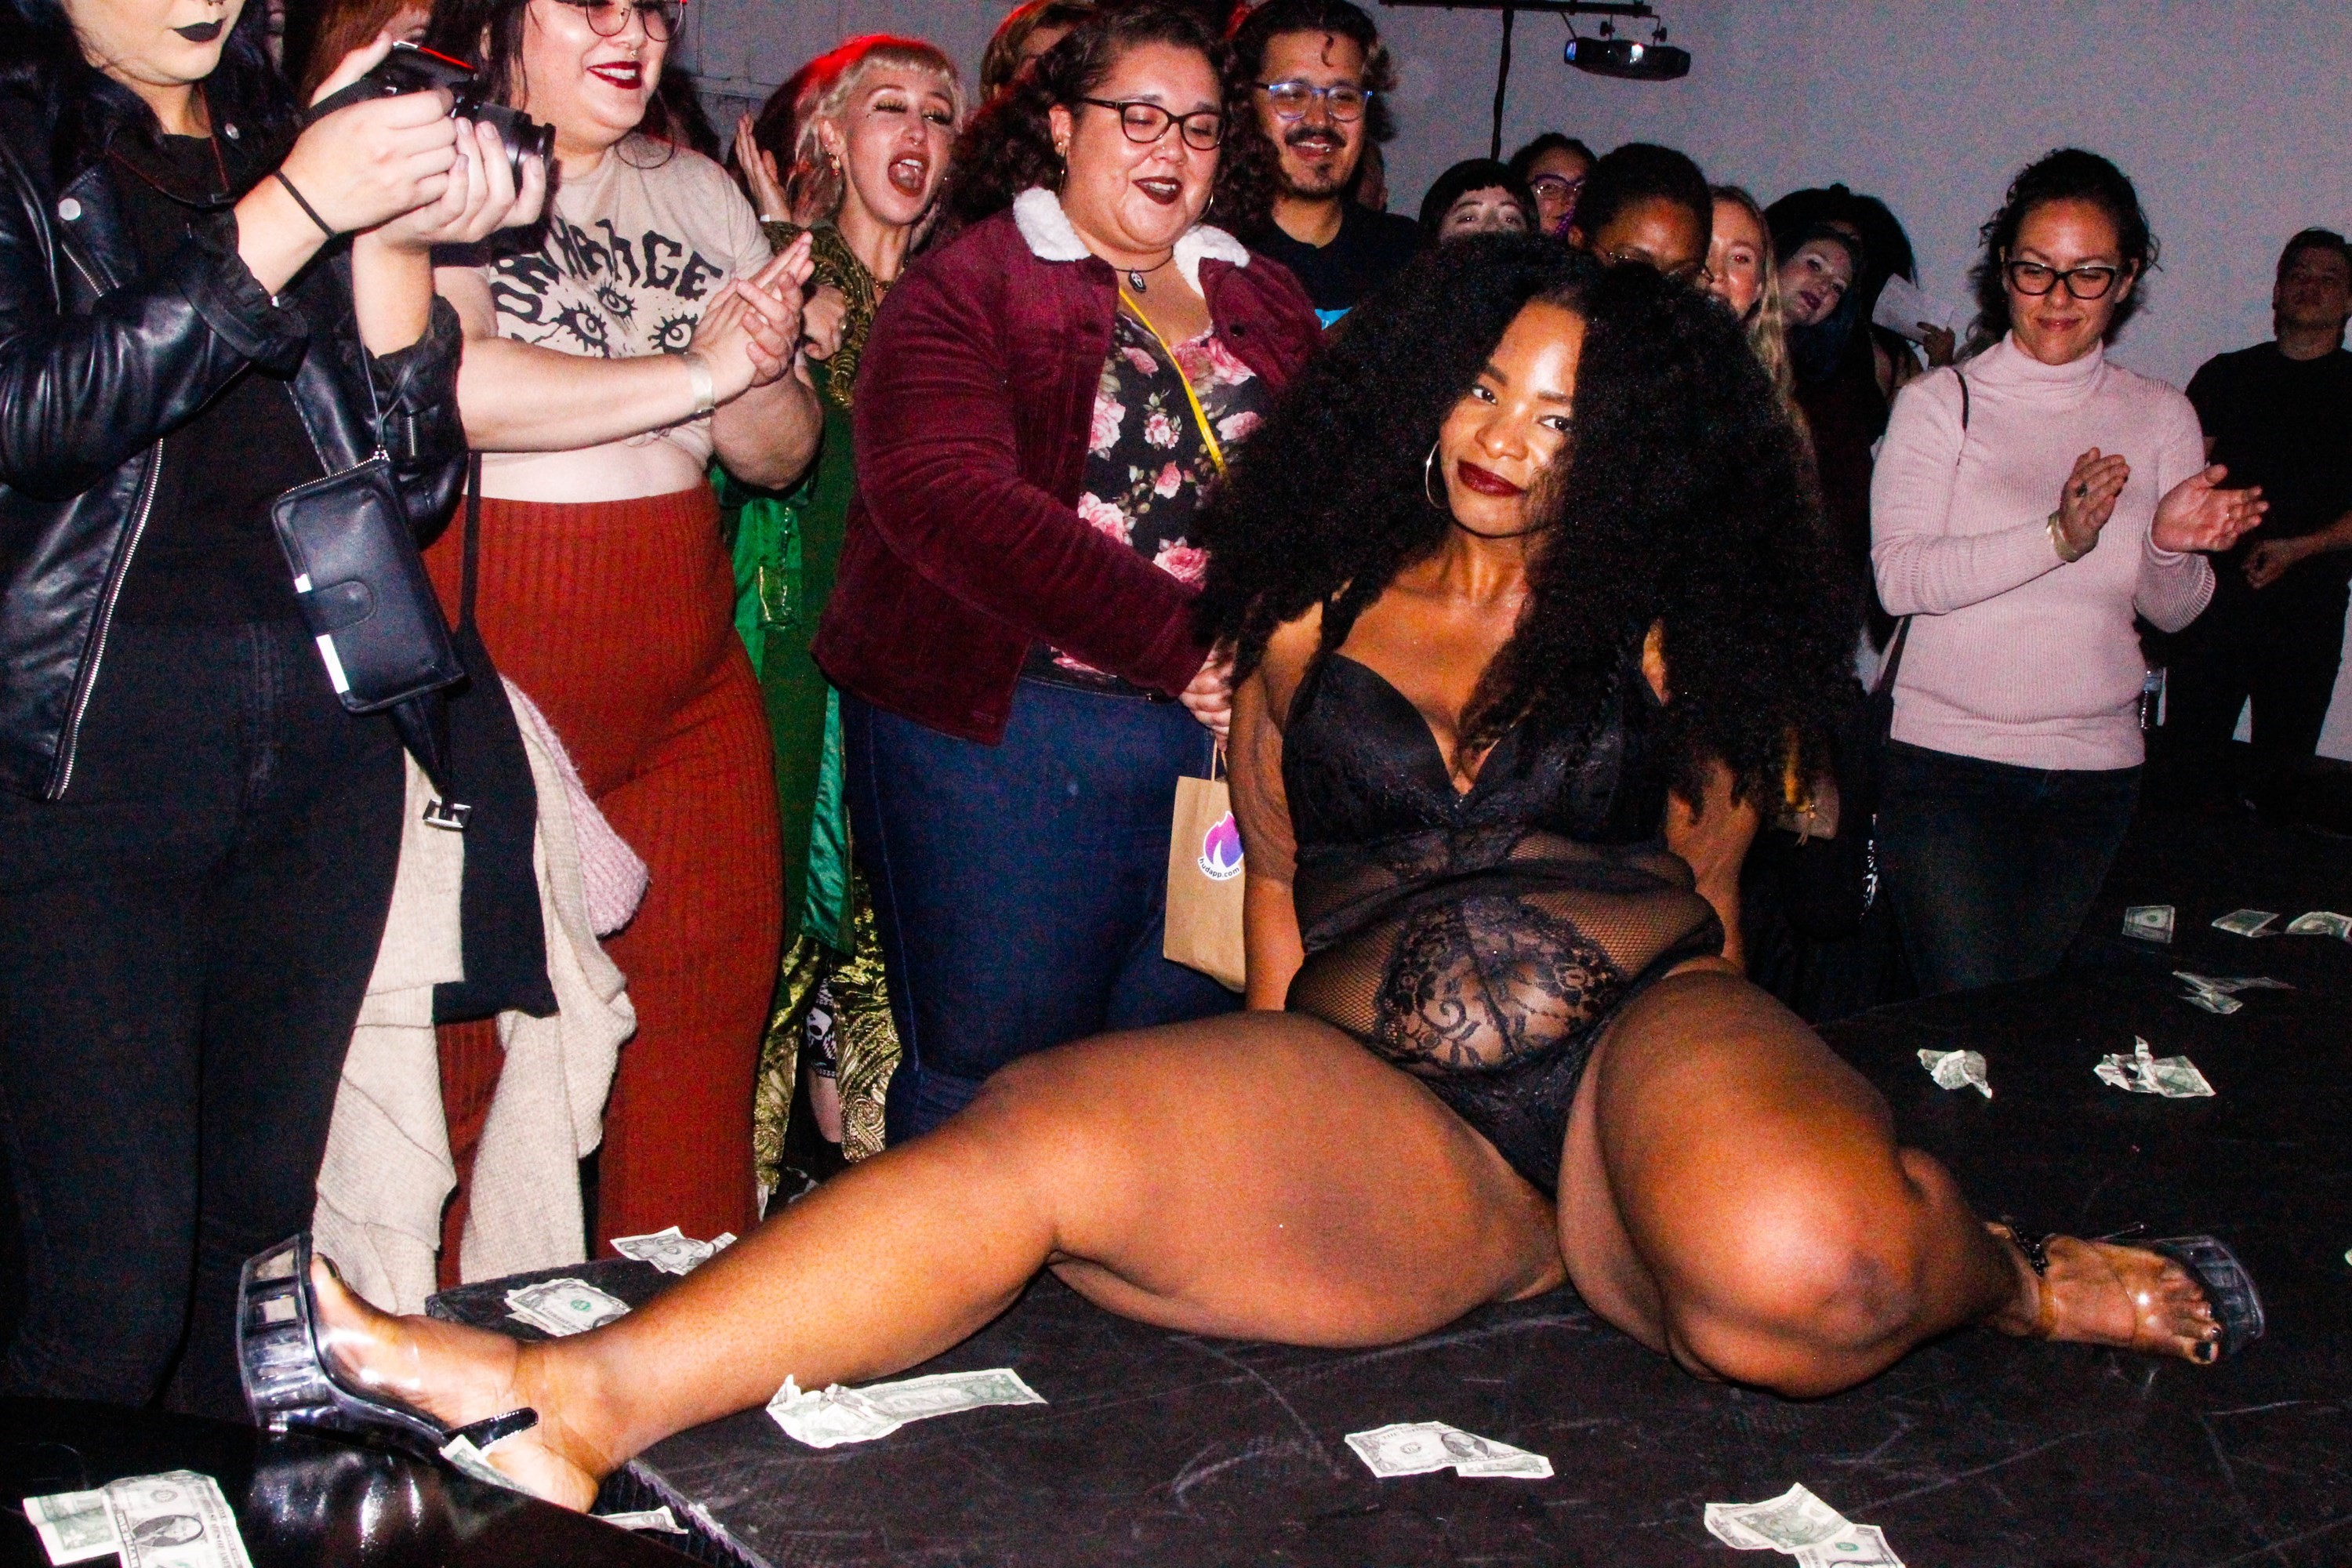 The body positive LA strip show founded by plus size women Dazed